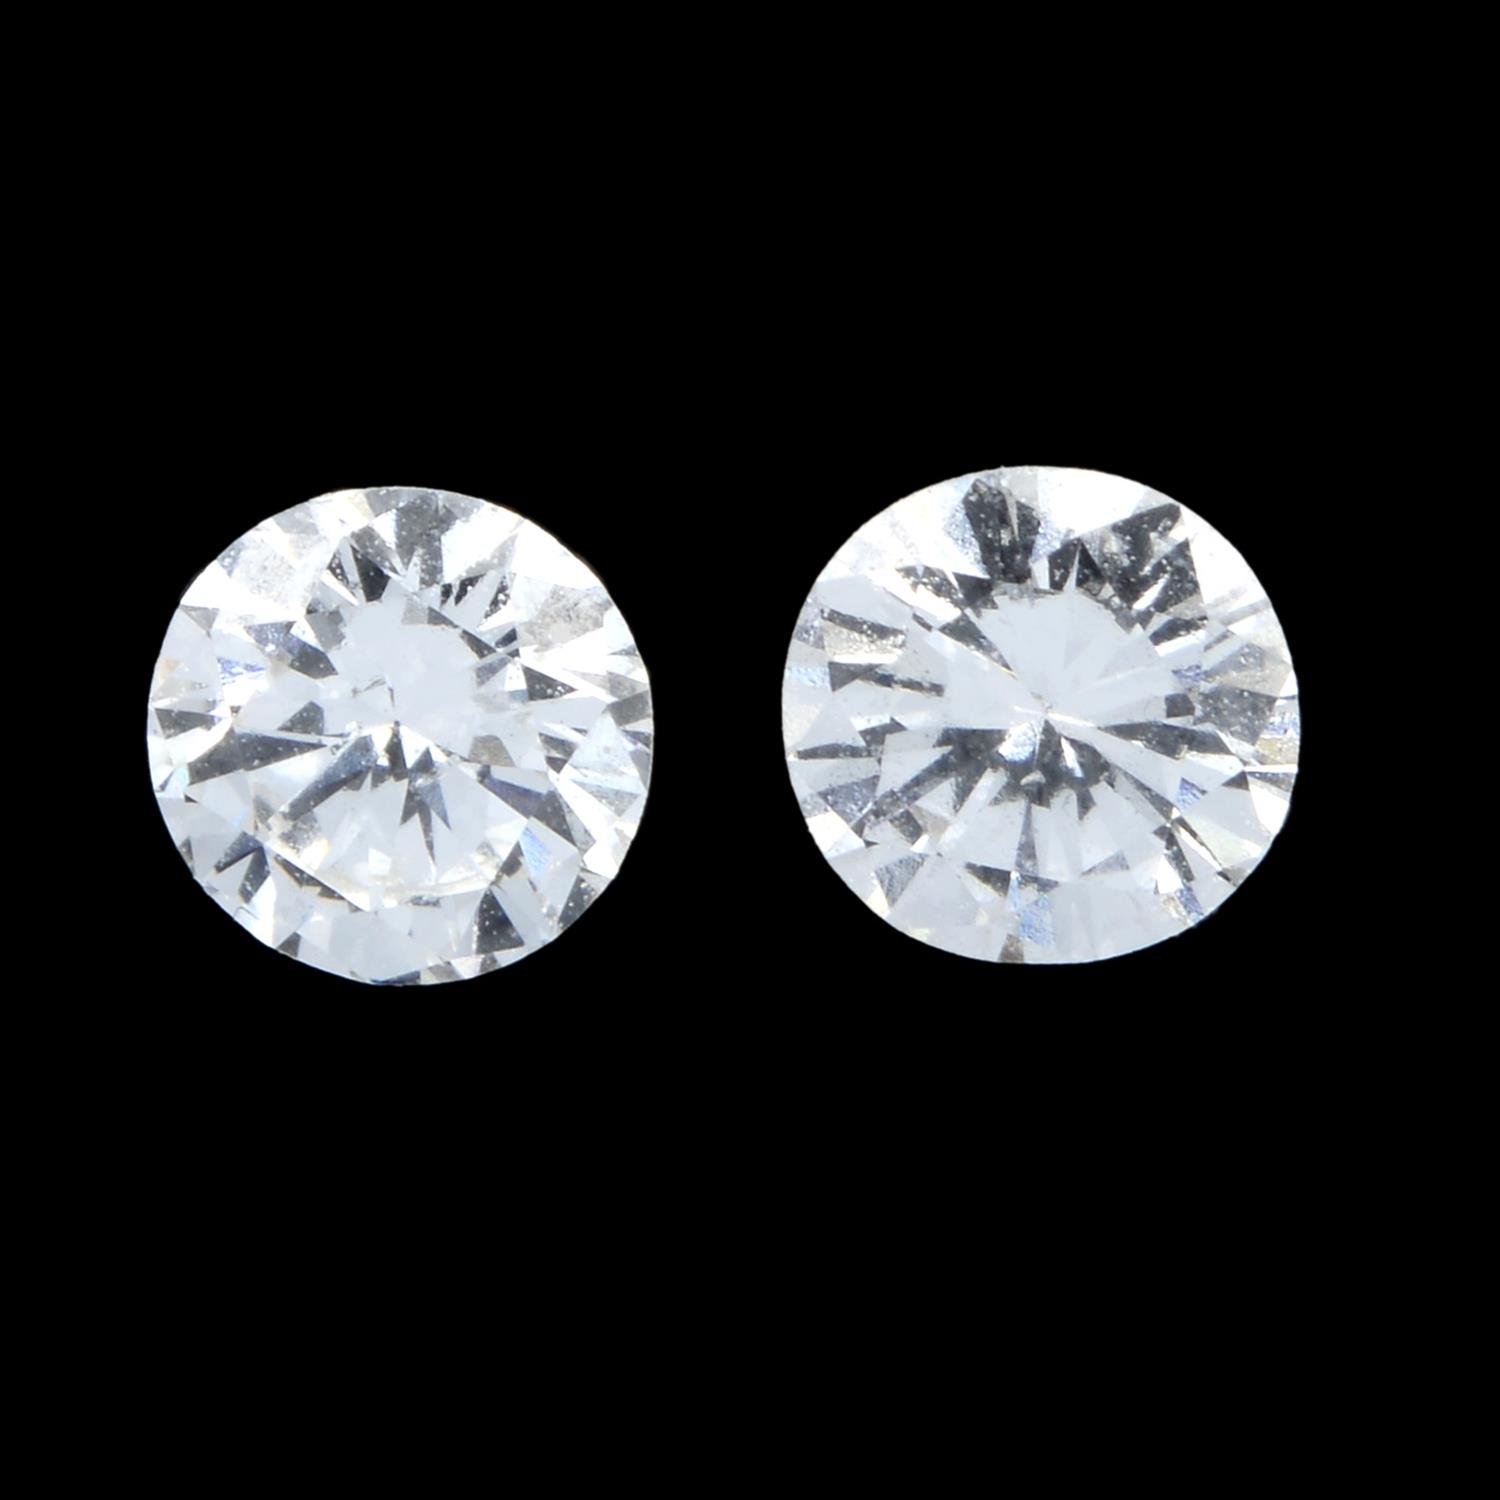 Pair of brilliant cut diamonds weighing 0.55ct